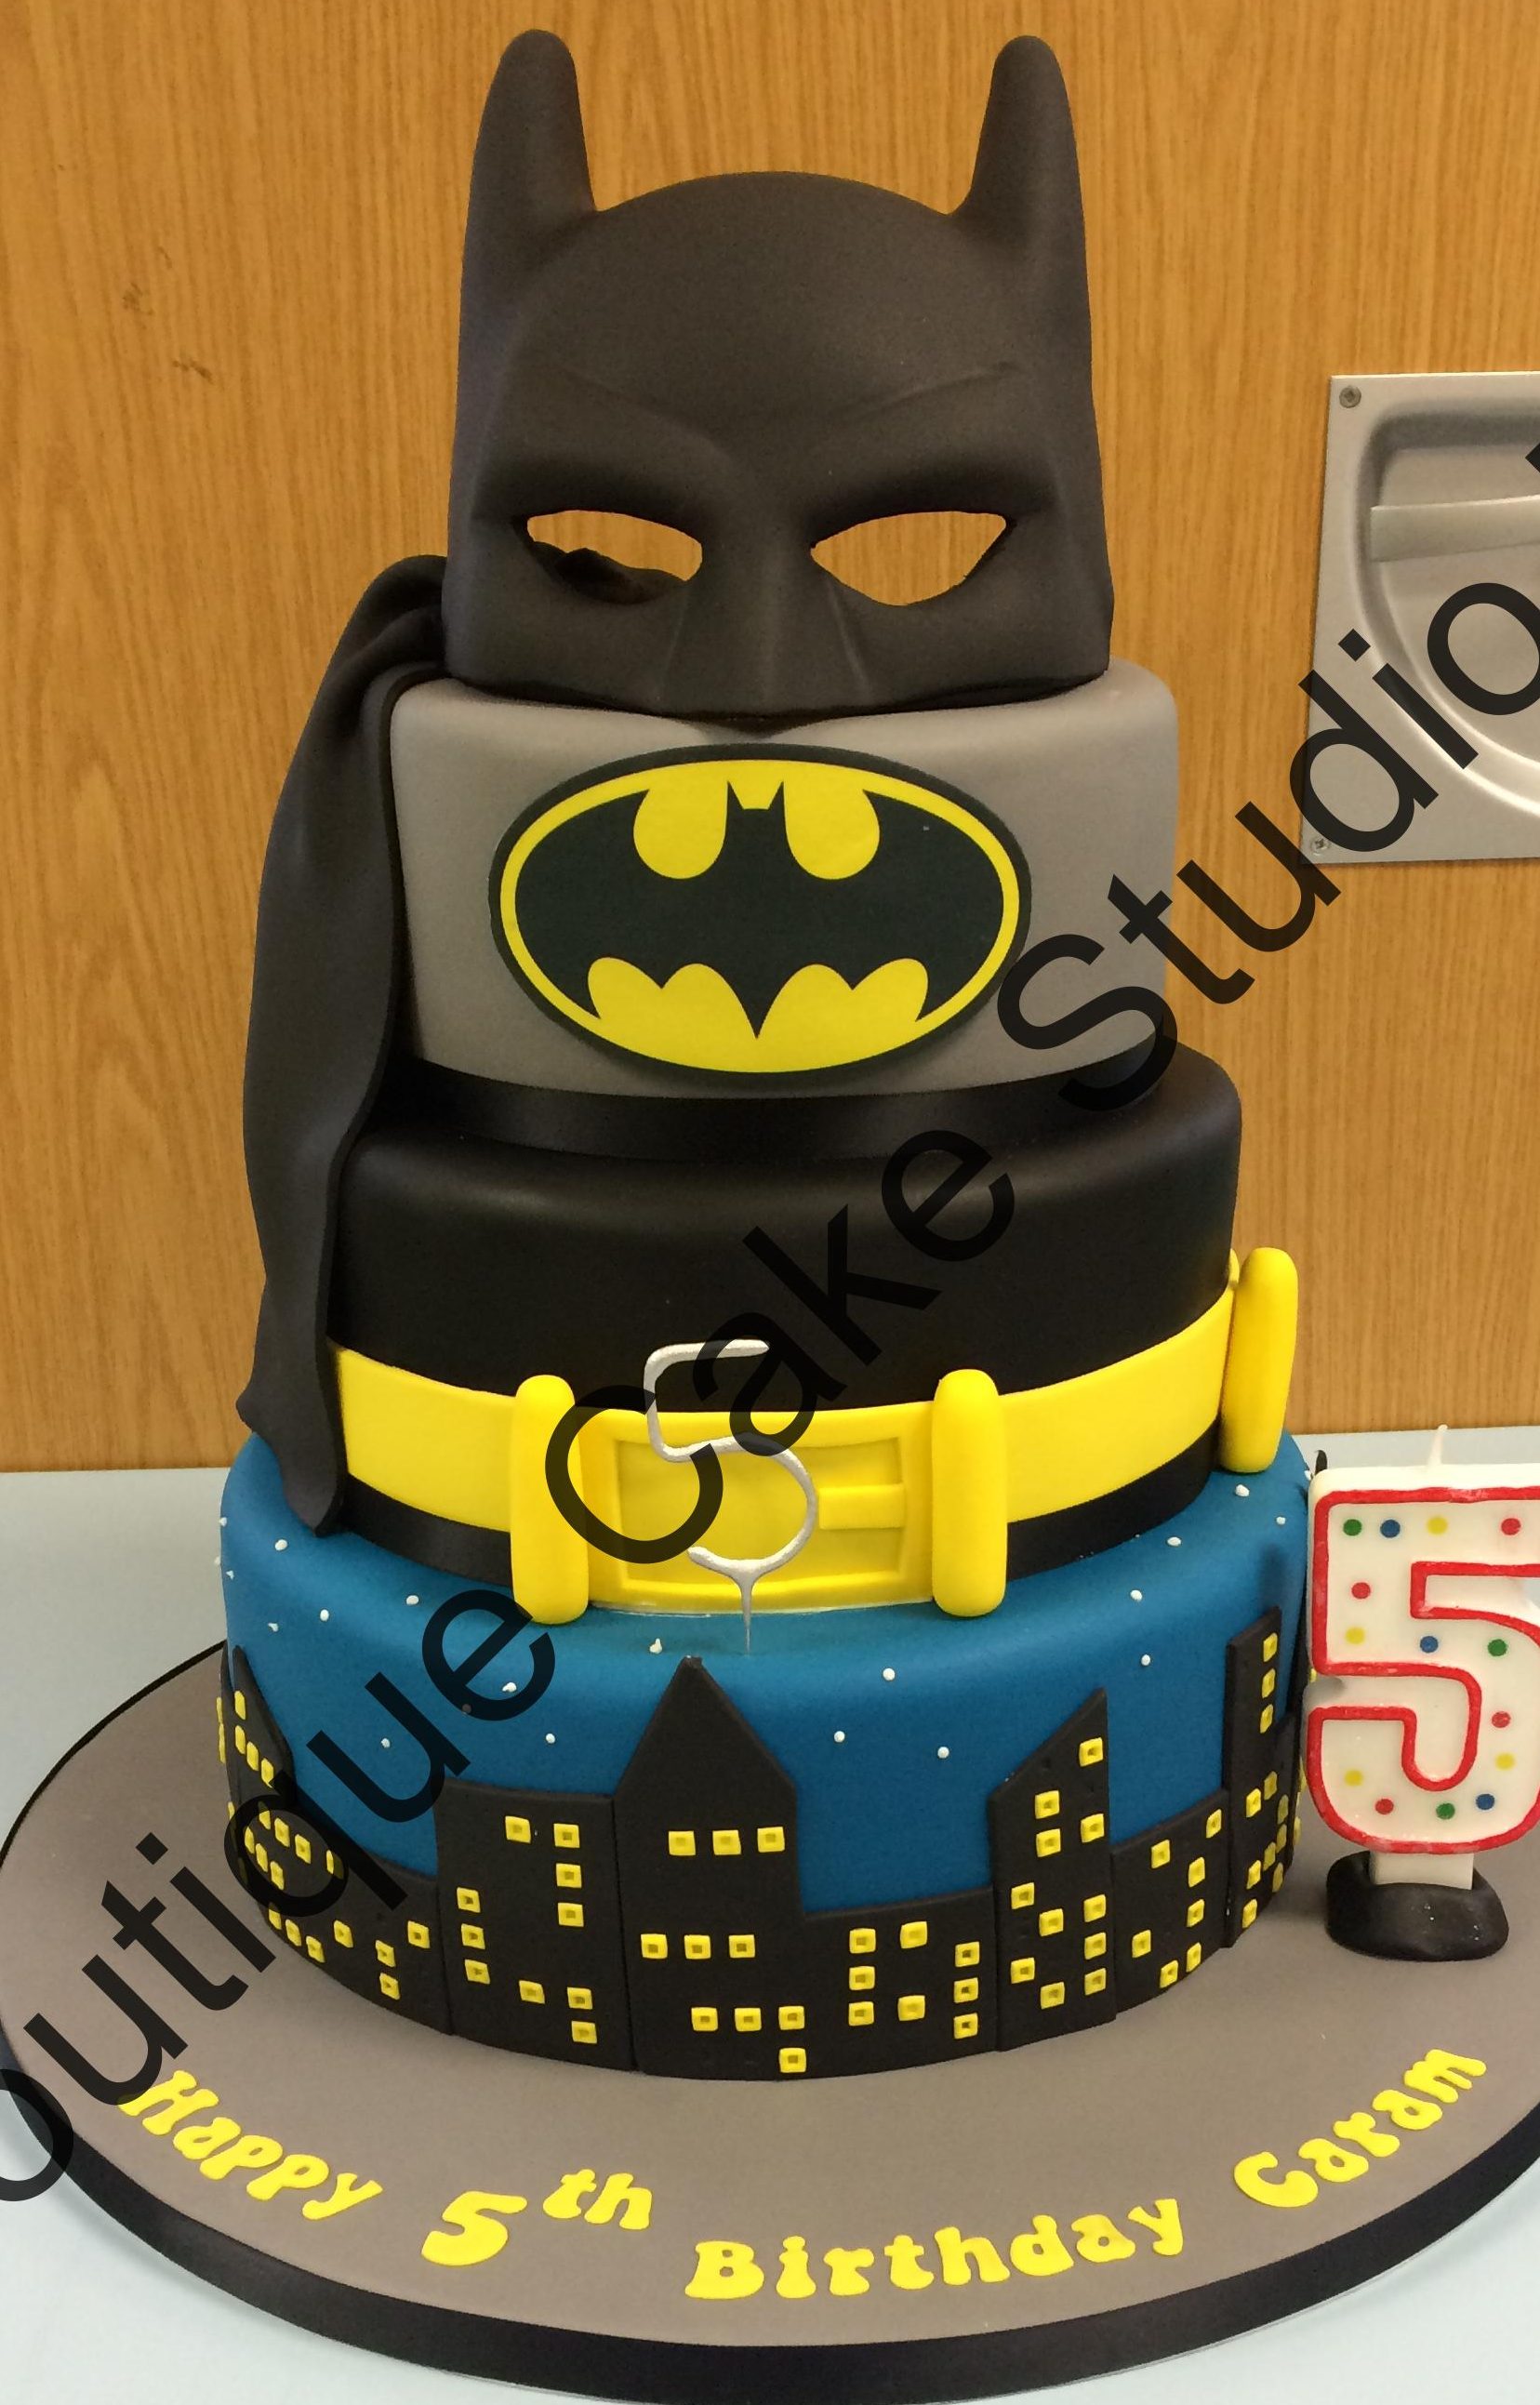 Batman Inspired Cake